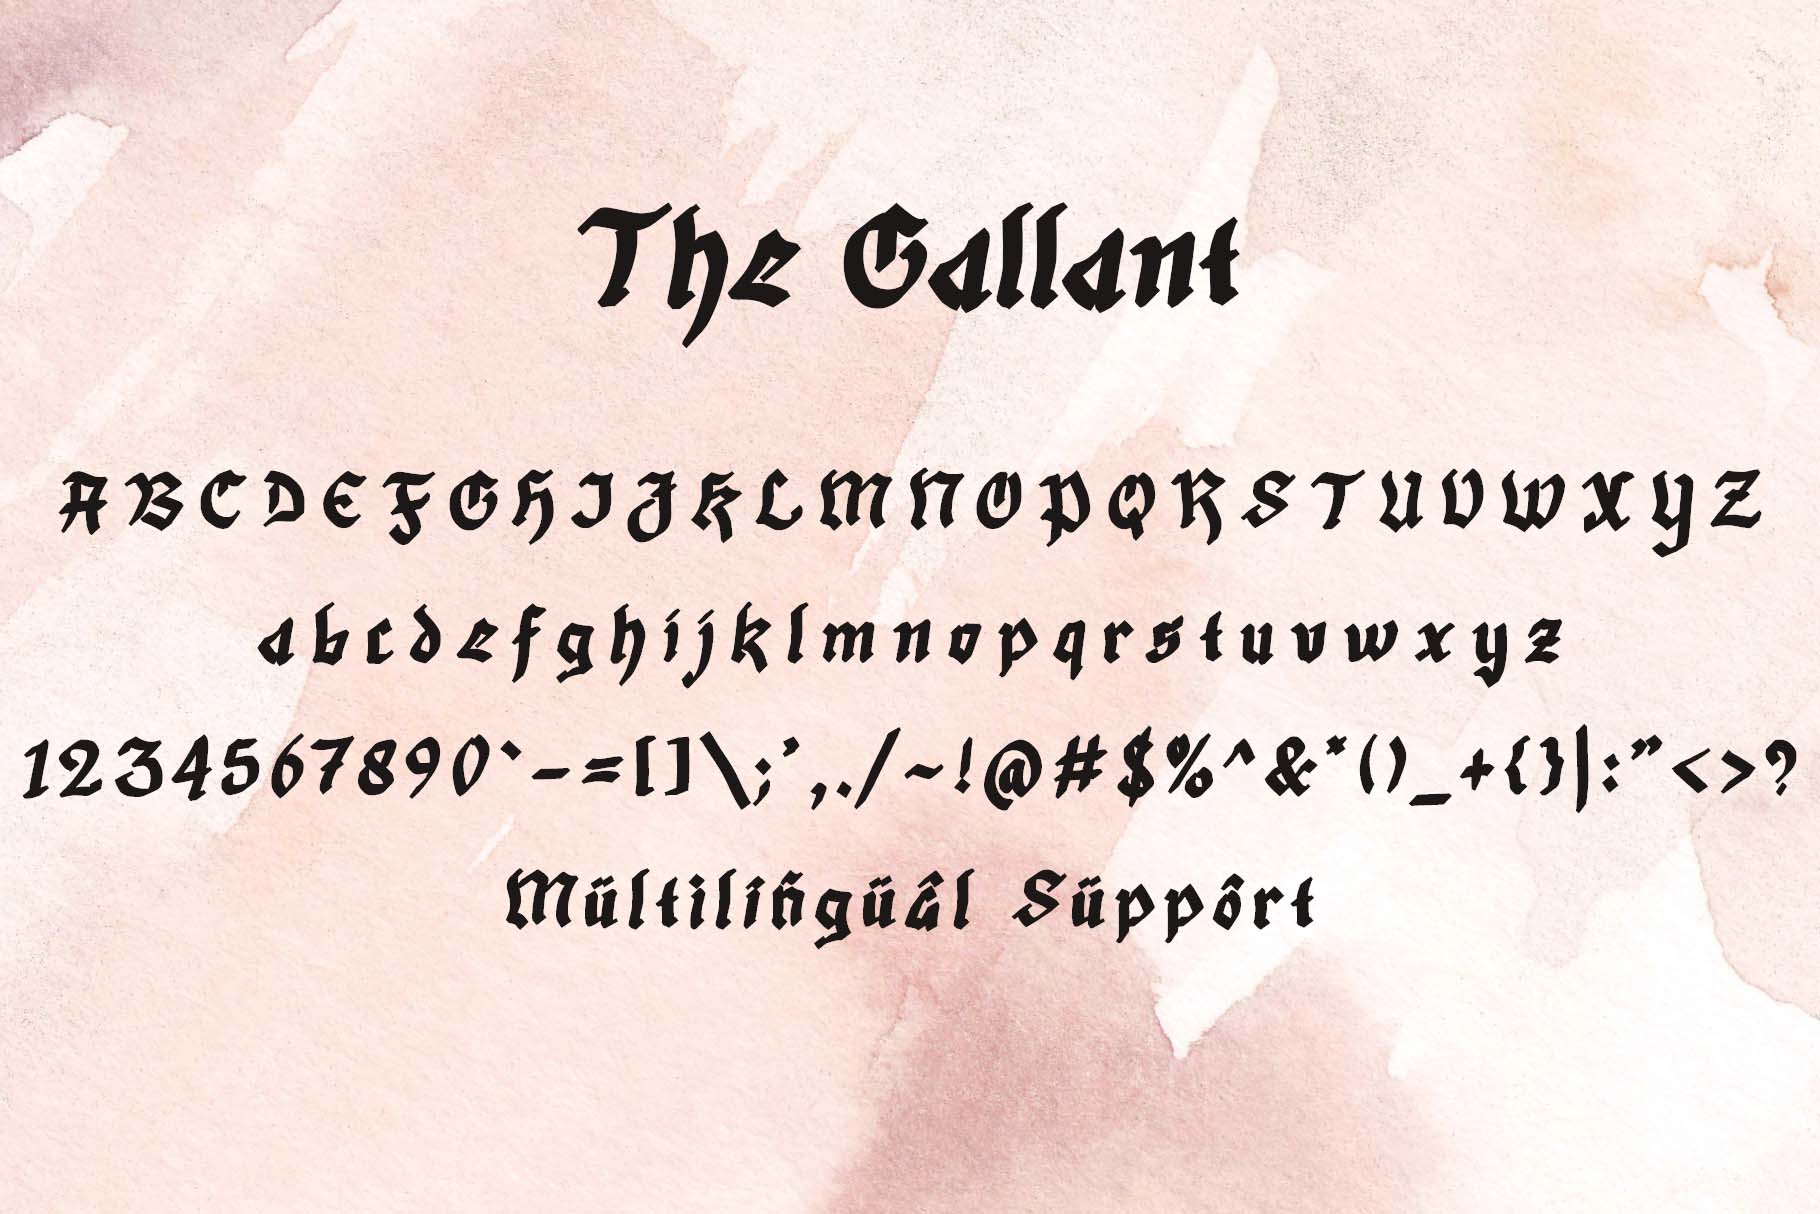 The Gallant Personal